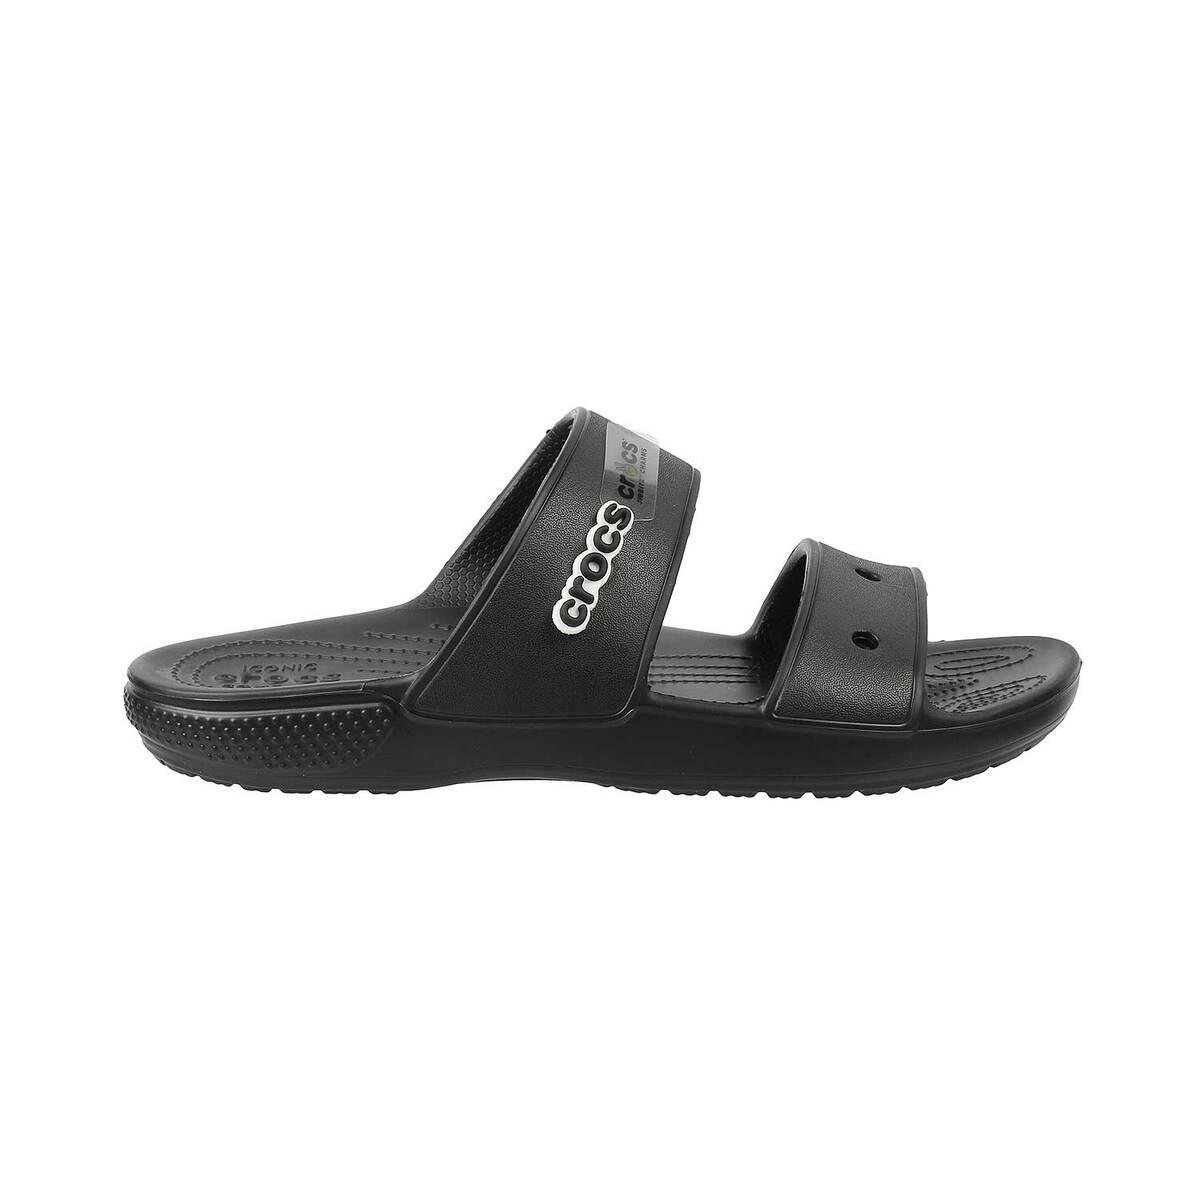 Buy Women Black Casual Slippers Online | SKU: 118-206761-001-4-Metro Shoes-sgquangbinhtourist.com.vn